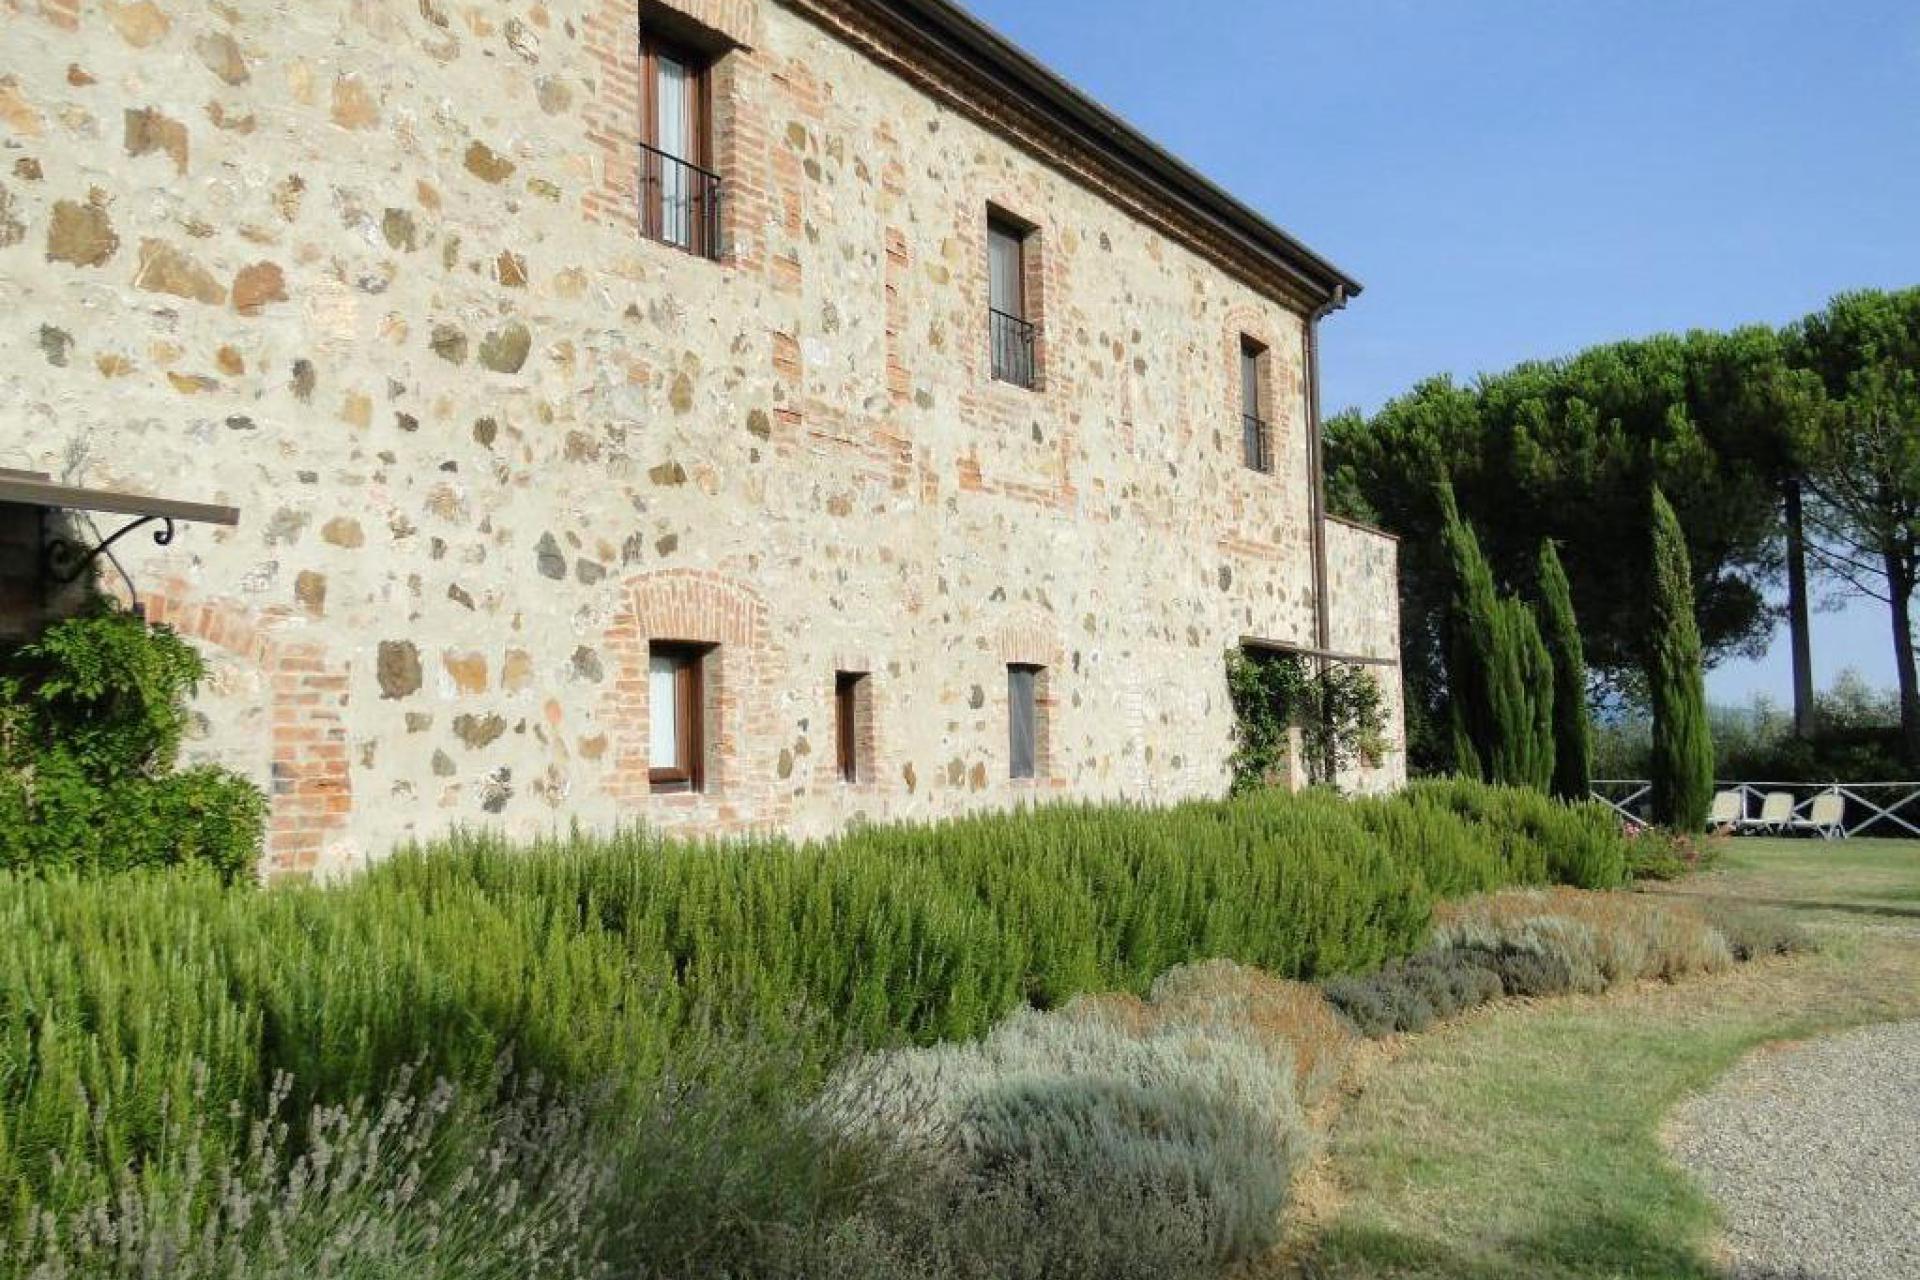 Agriturismo Tuscany Agriturismo between vineyards south of Siena